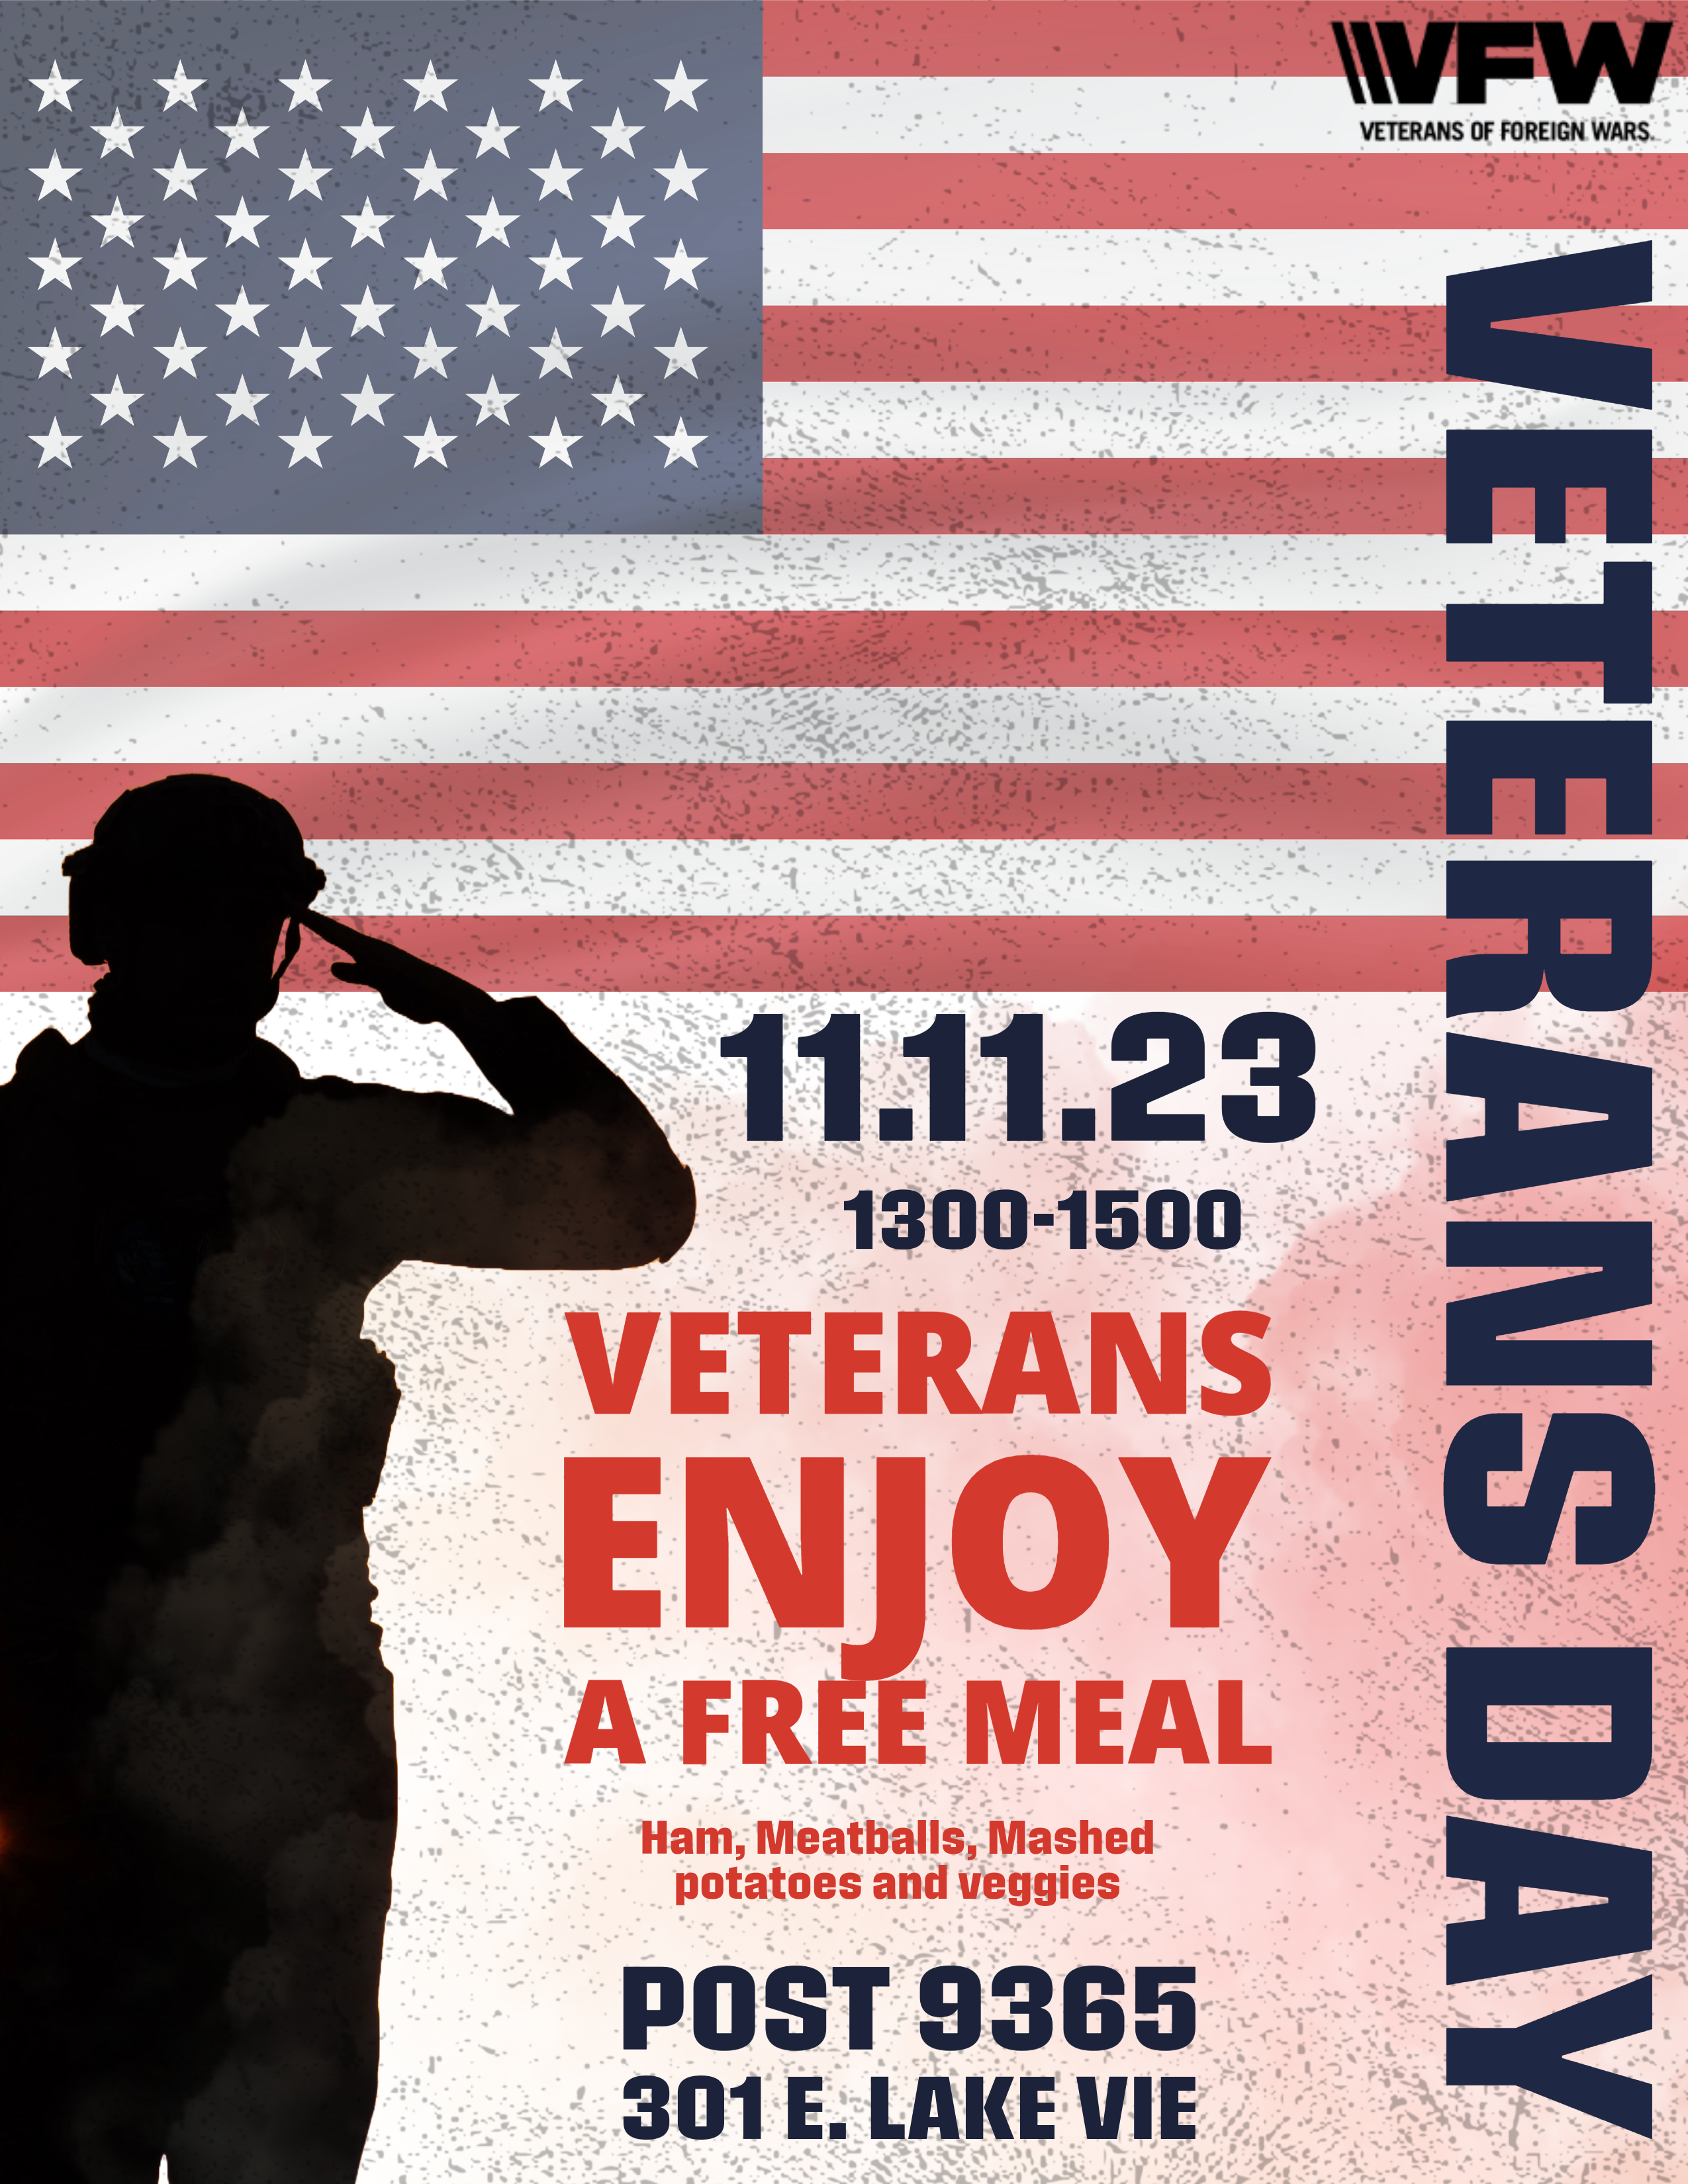 Veteran event to celebrate veterans' day.